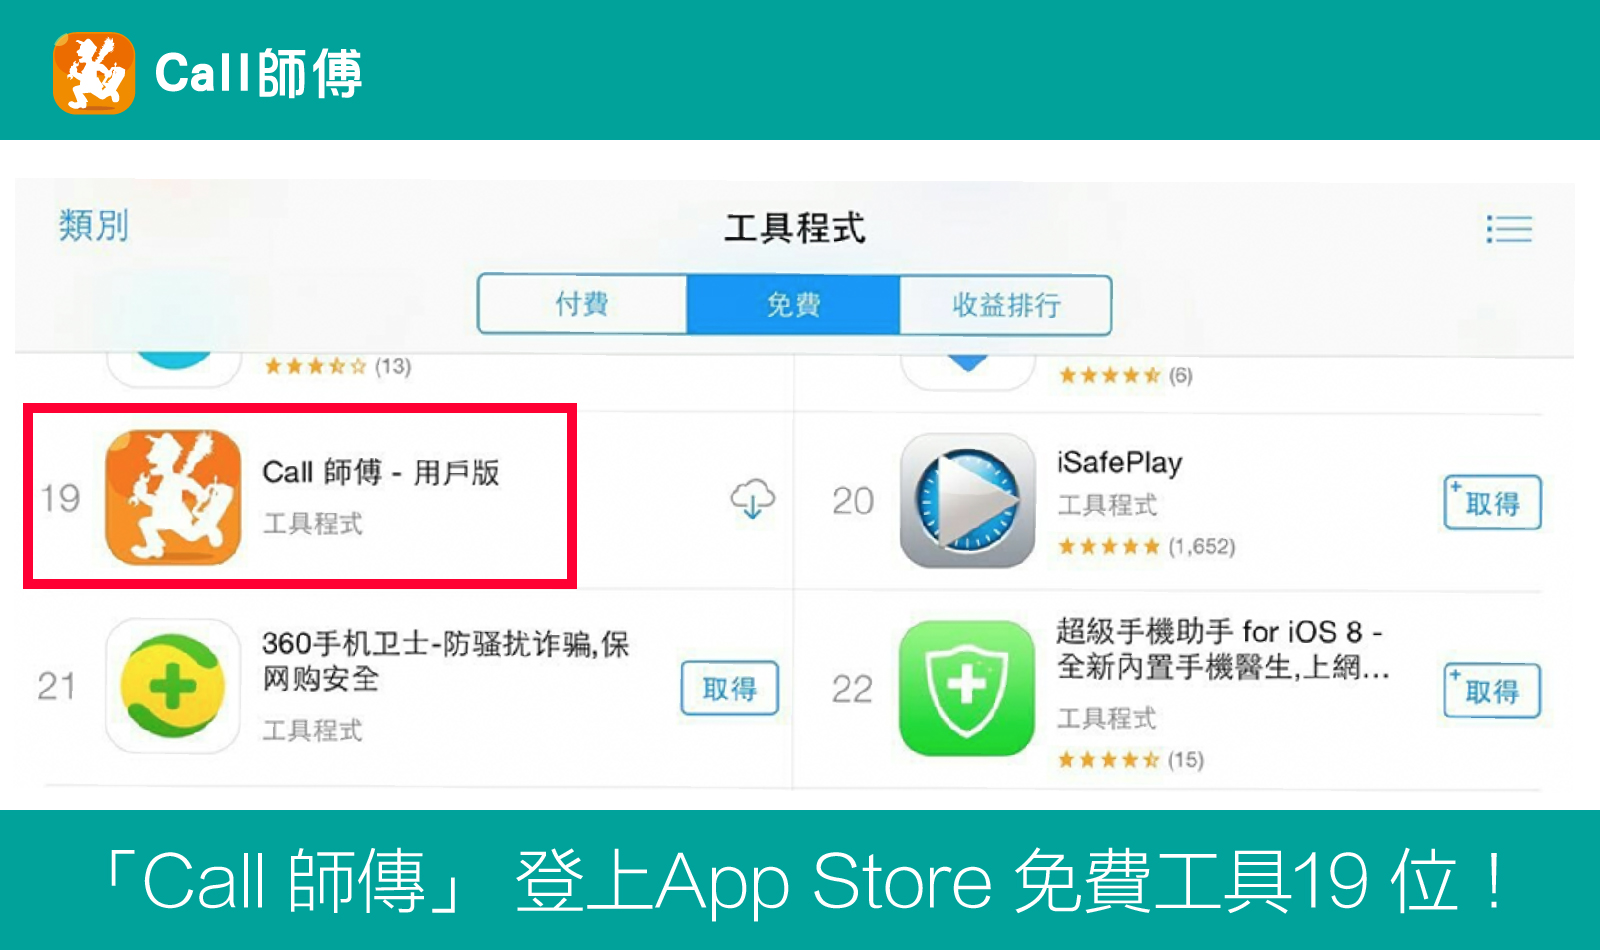 「Call 師傳」 登上App Store 免費工具19 位！